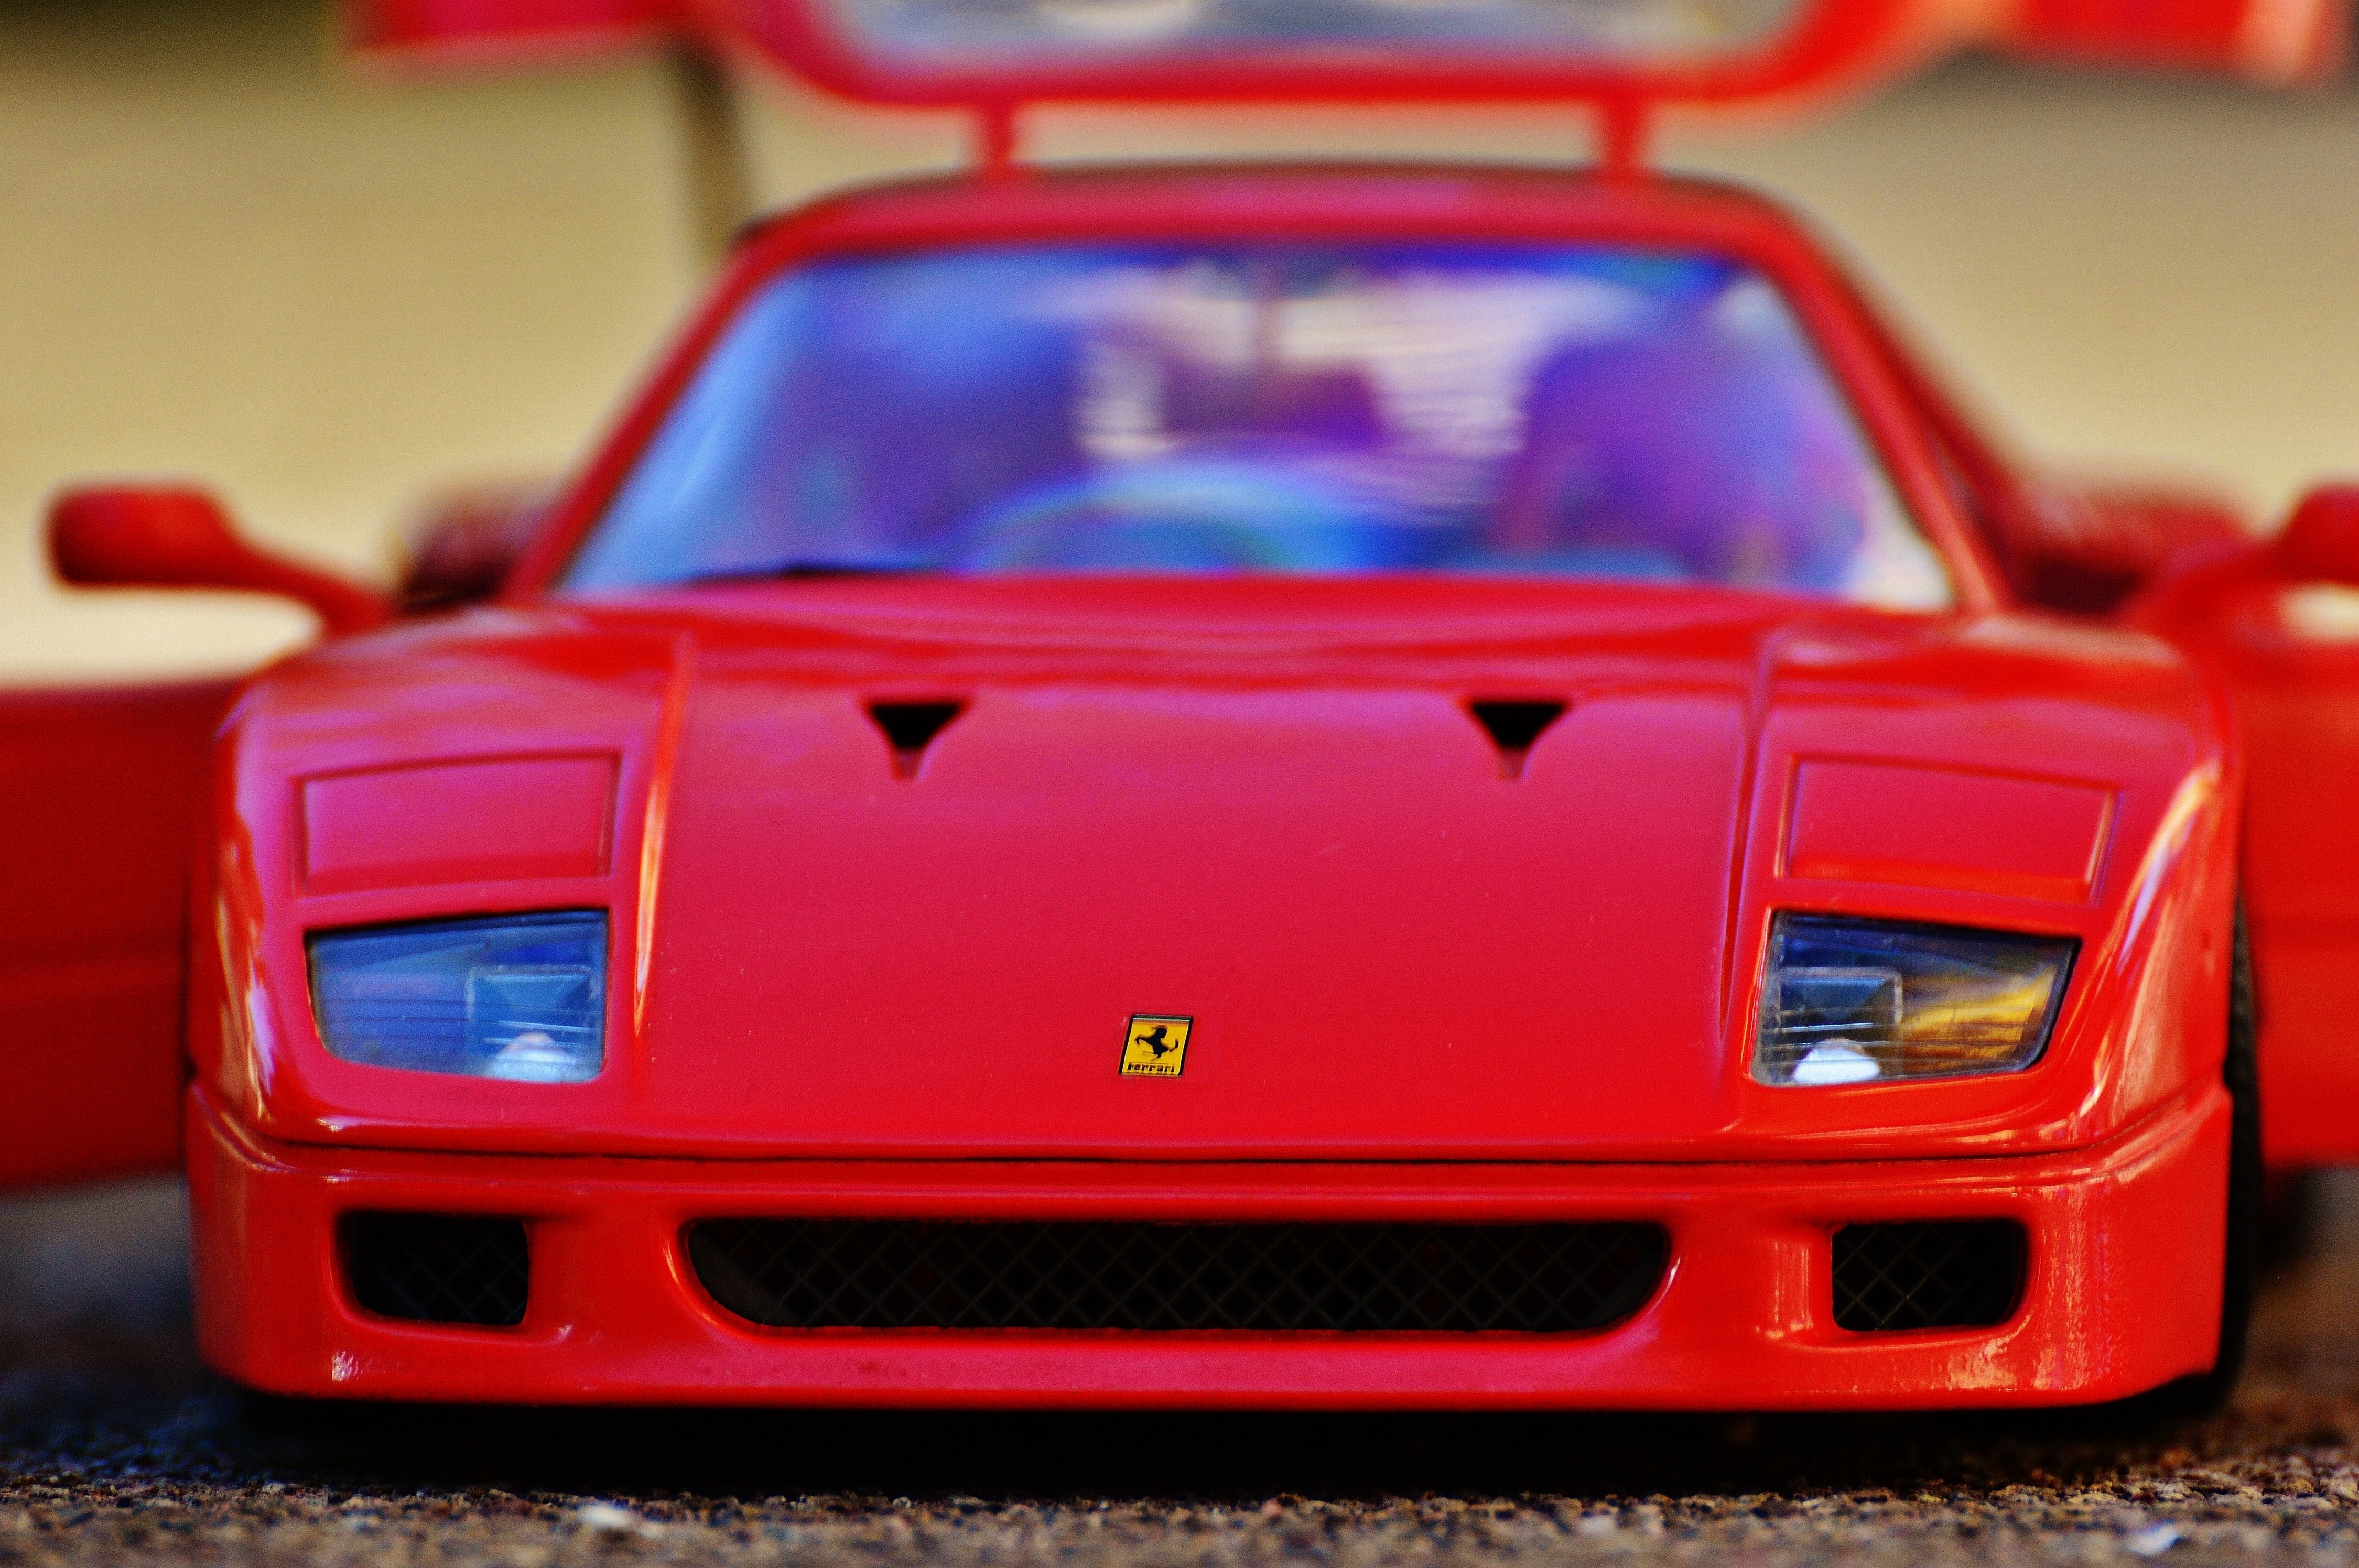 selective focus photo of red Ferrari F40 die cast scale model